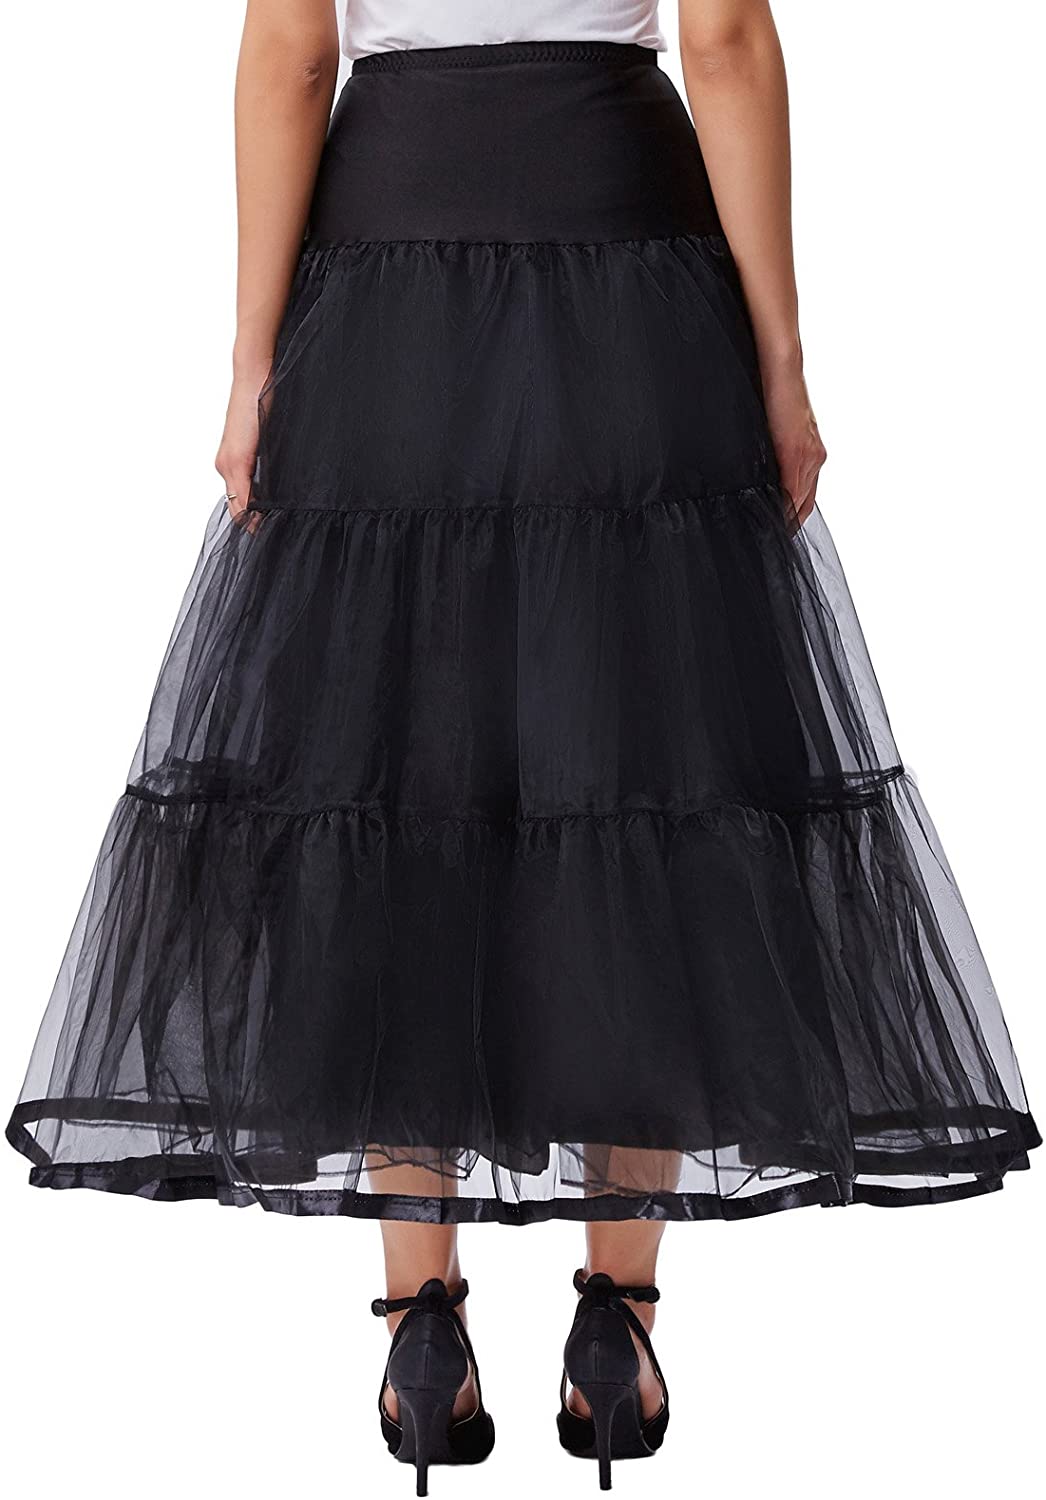 GRACE KARIN Women's Ankle Length Petticoats Wedding Slips Plus Size S ...